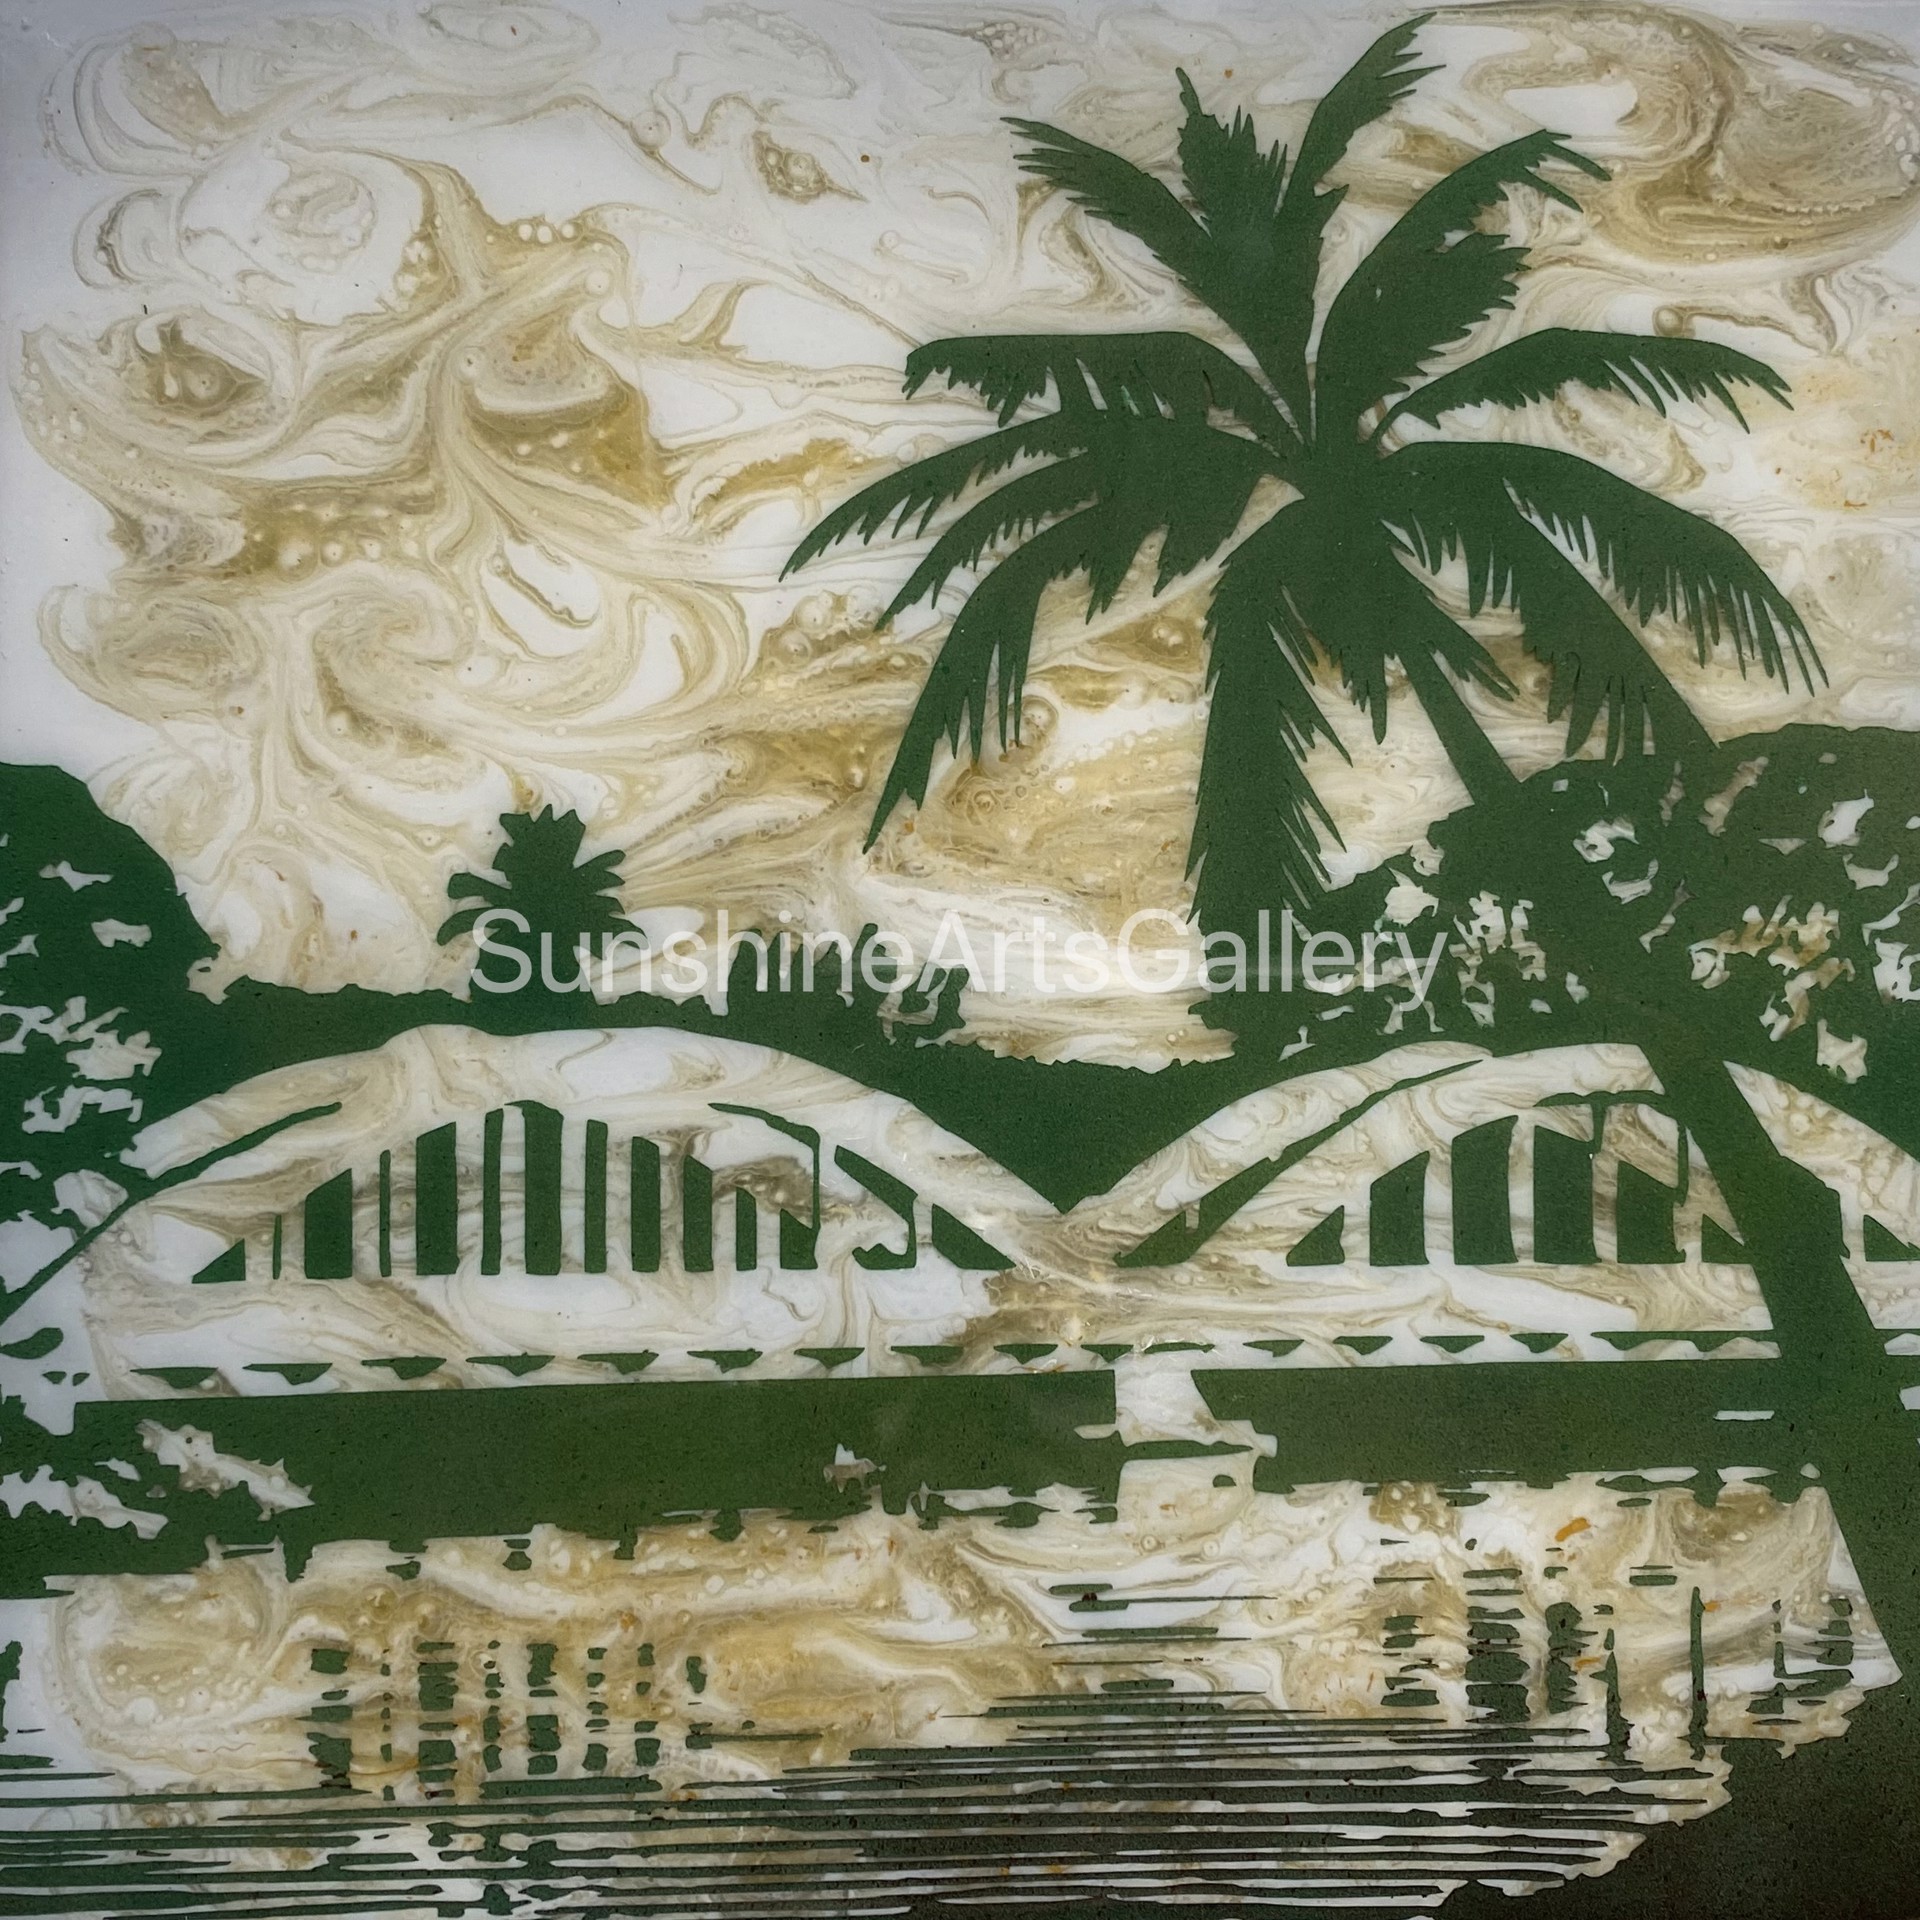 Anahulu Bridge by Pati O'Neal